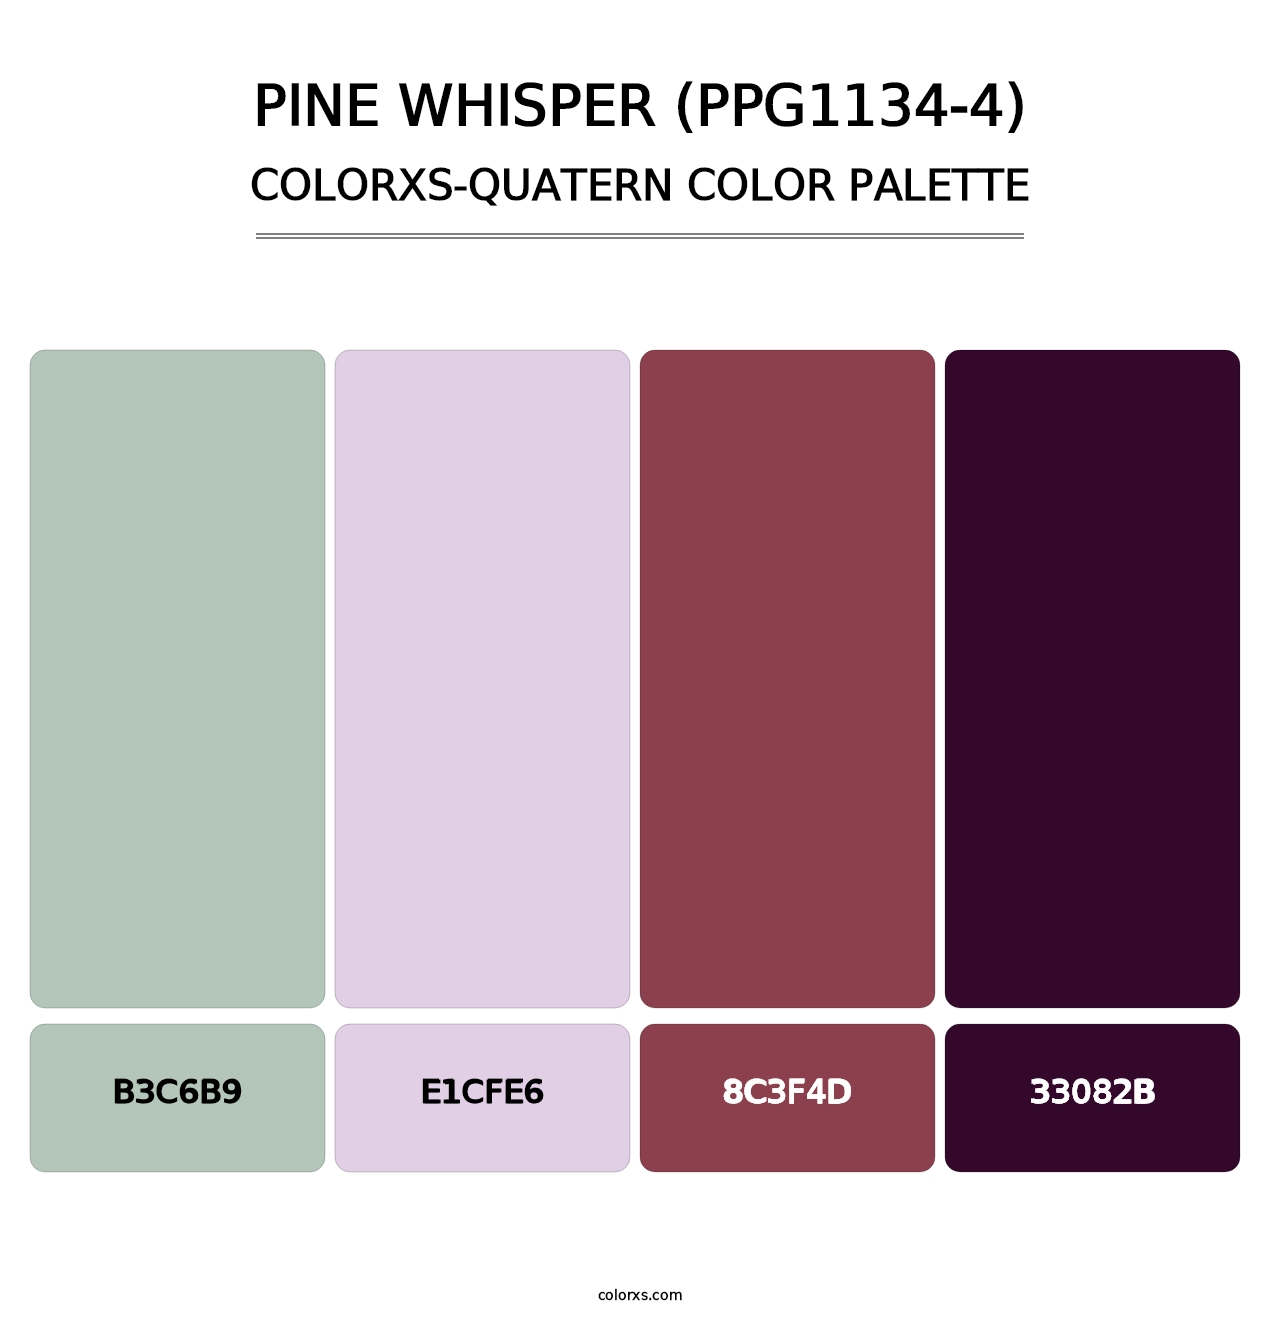 Pine Whisper (PPG1134-4) - Colorxs Quatern Palette